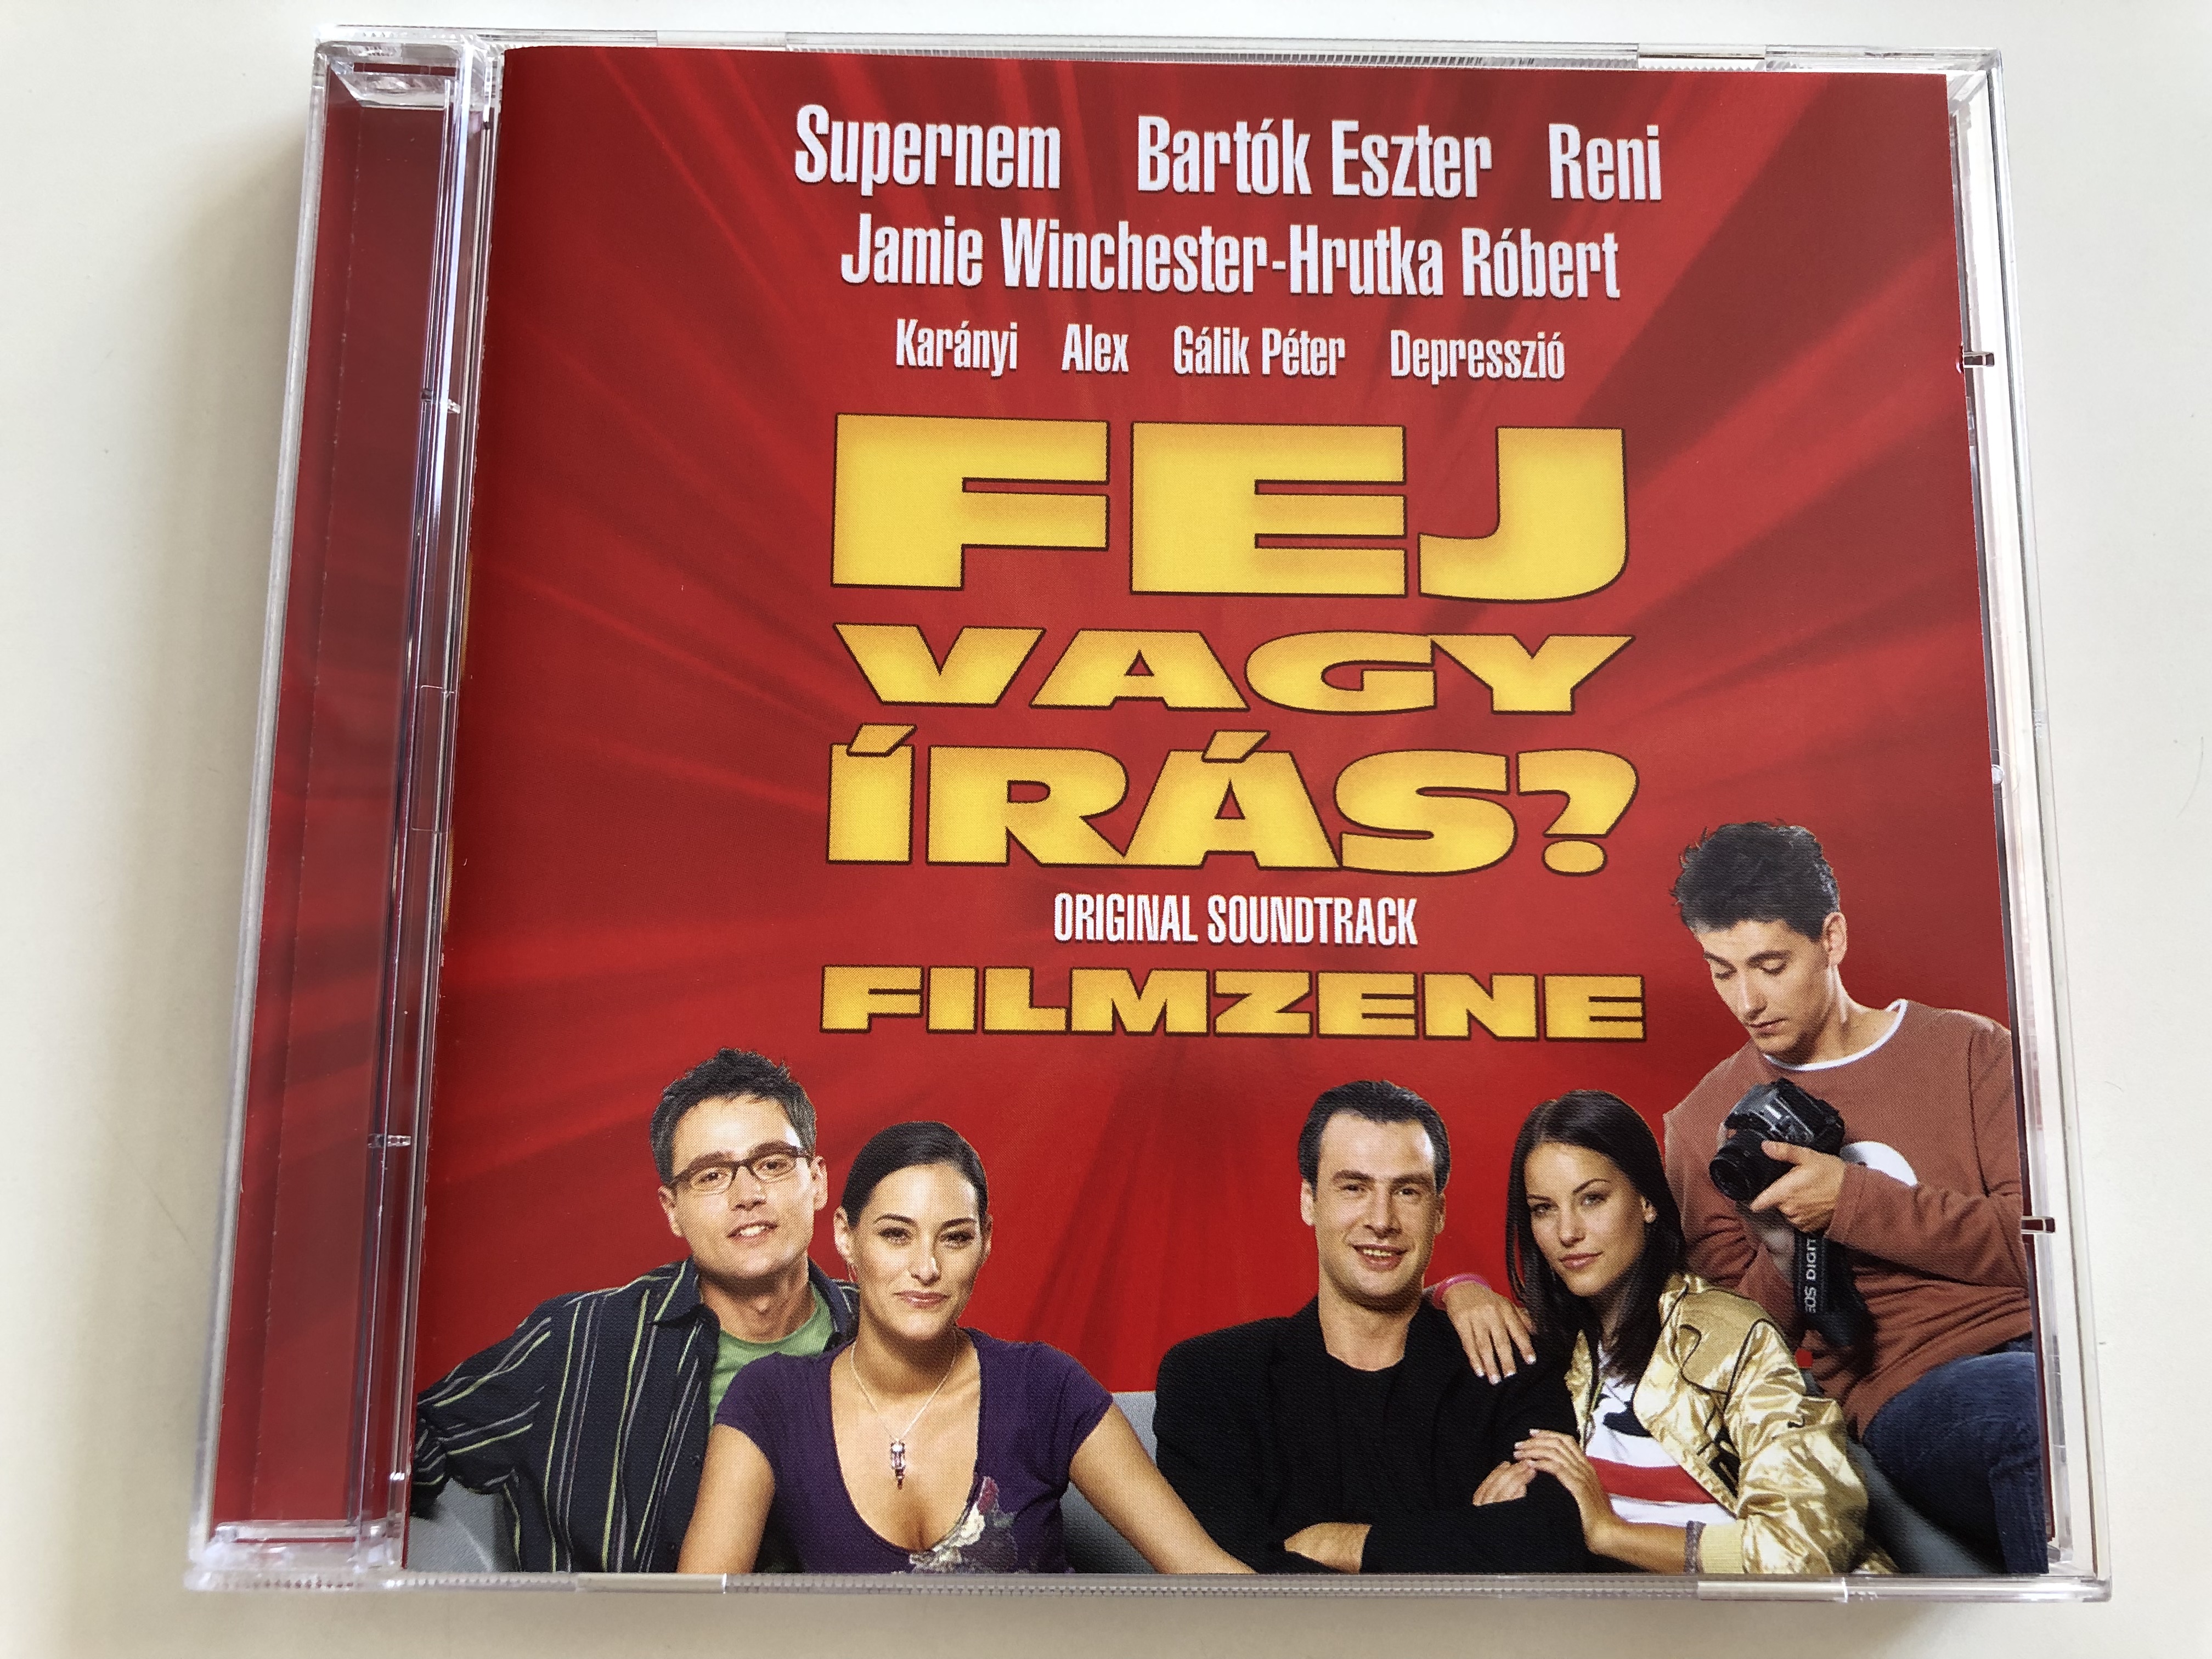 fej-vagy-r-s-original-soundtrack-filmzene-supernem-bart-k-eszter-reni-jamie-winchester-hrutka-r-bert-audio-cd-2005-tomtom-records-ttcd-77-1-.jpg